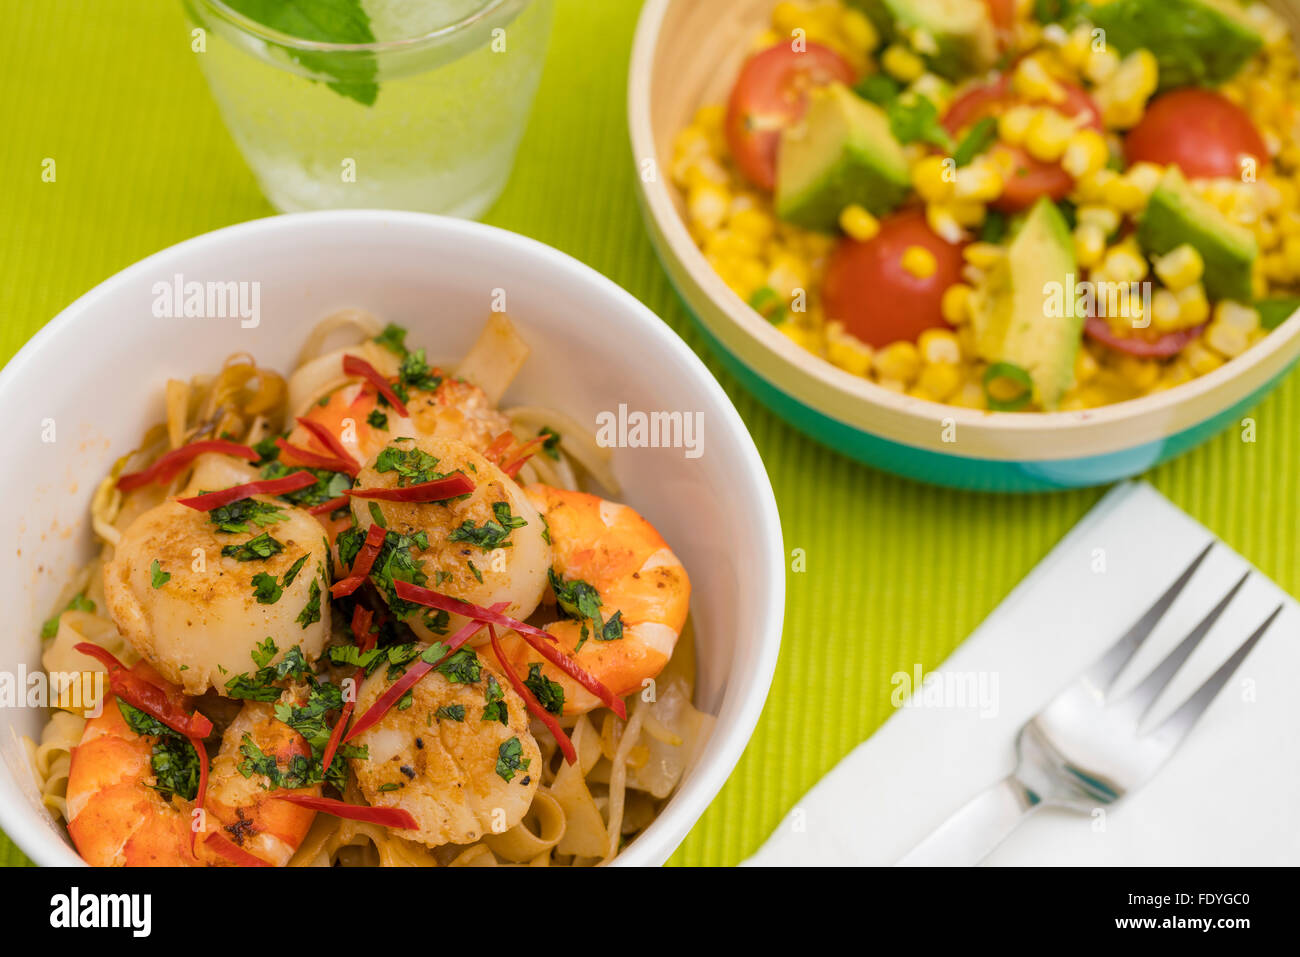 Salade de nouilles et de fruits de mer Banque D'Images